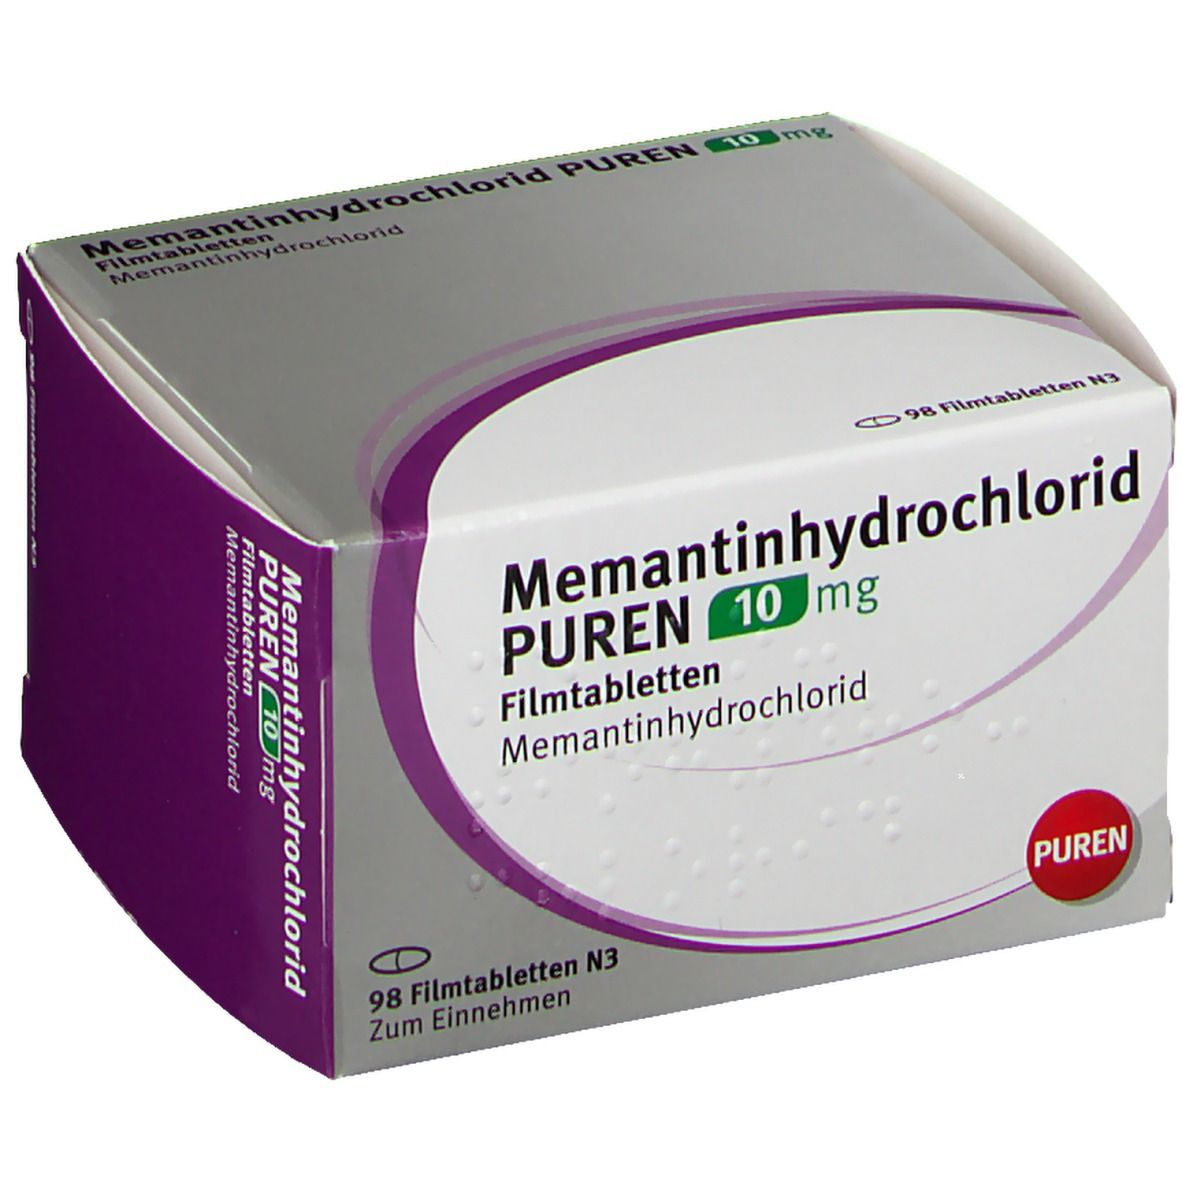 Memantinhydrochlorid PUREN 10 mg